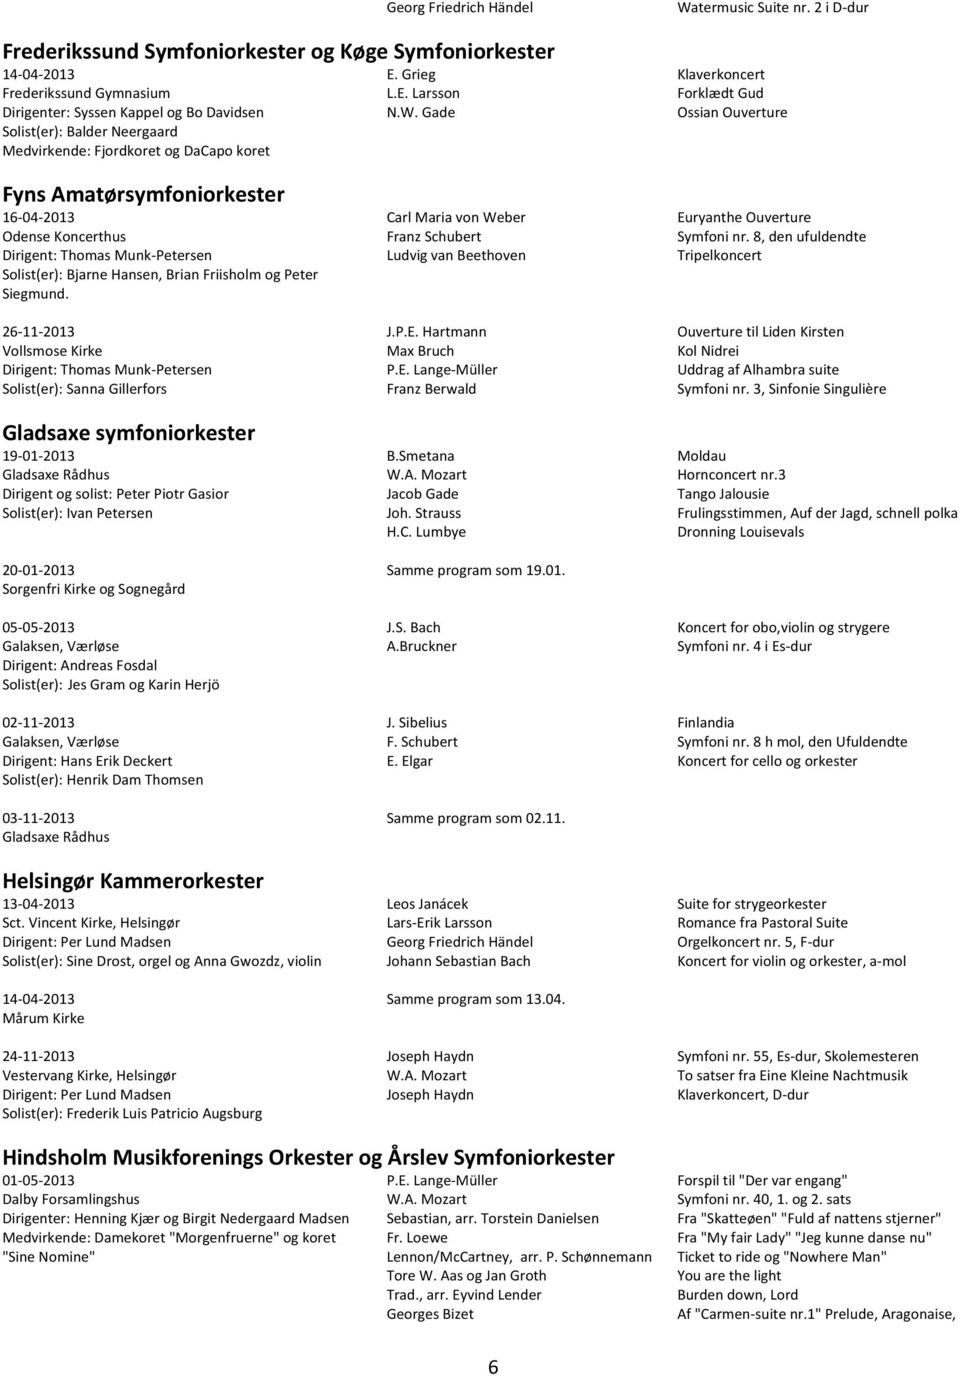 Schubert Symfoni nr. 8, den ufuldendte Dirigent: Thomas Munk- Petersen Ludvig van Beethoven Tripelkoncert Solist(er): Bjarne Hansen, Brian Friisholm og Peter Siegmund. 26-11- 2013 J.P.E.